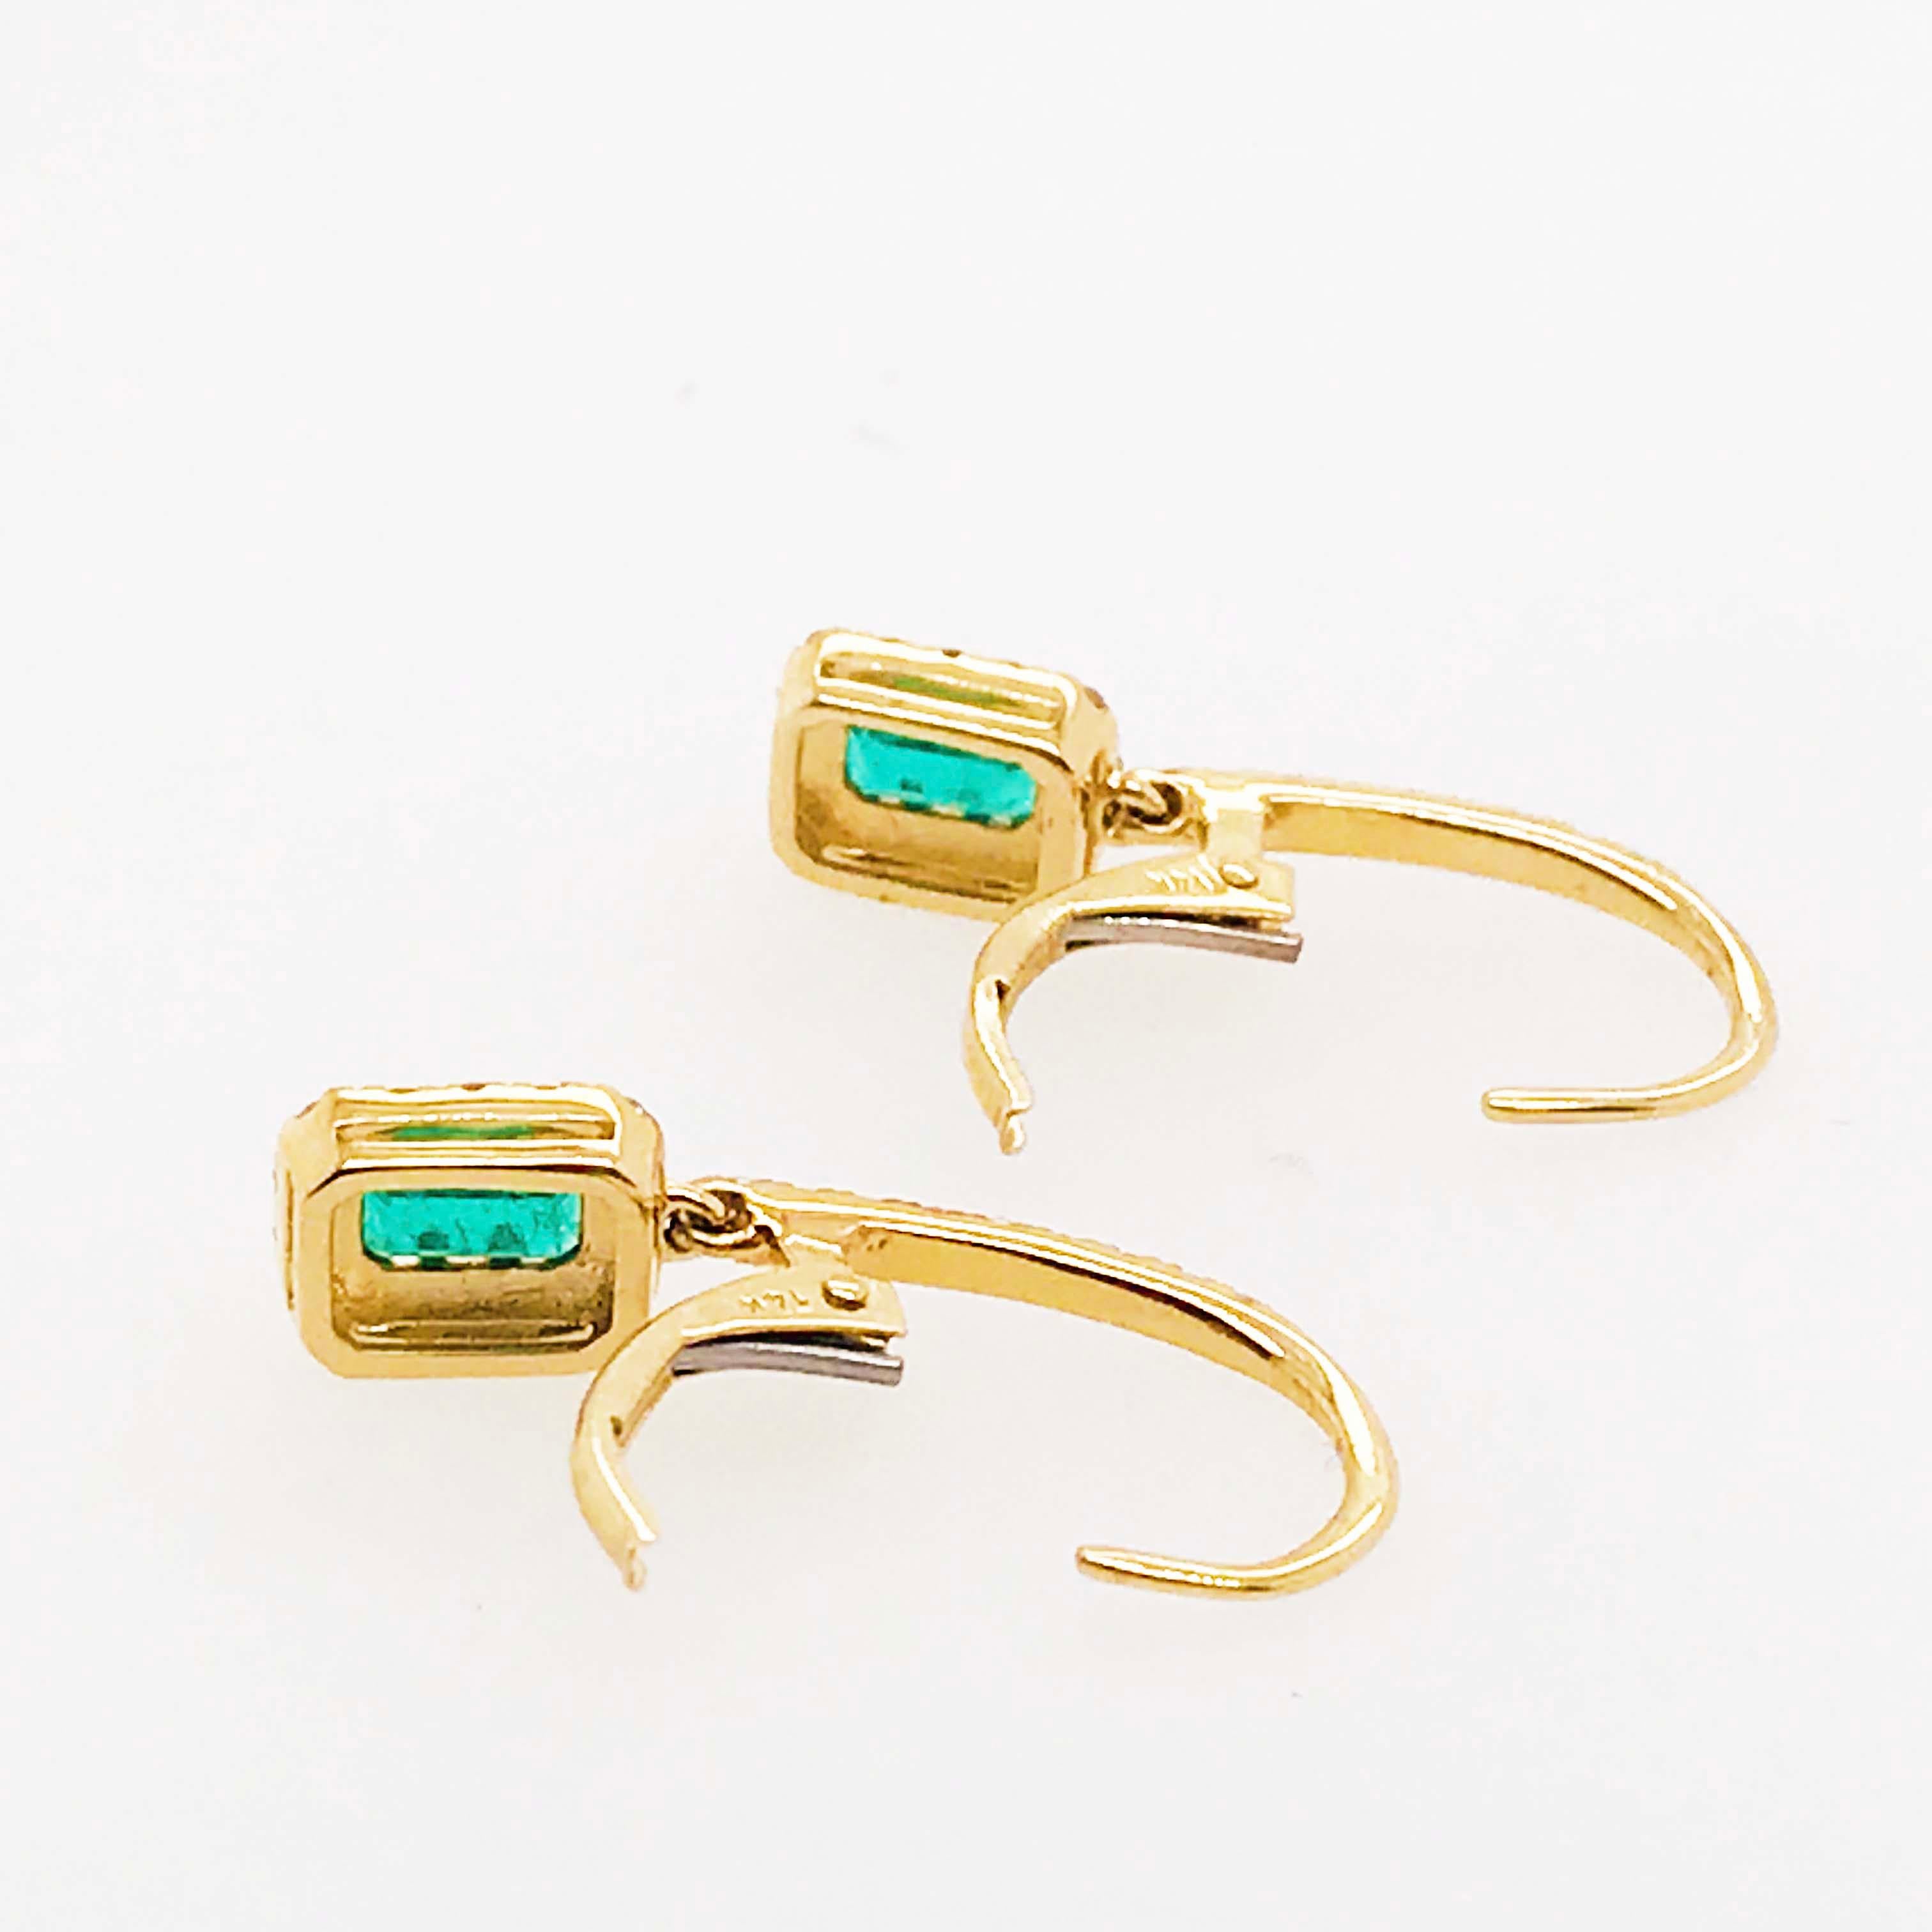 Original Emerald and Diamond Earring Dangles in 14 Karat Yellow Gold 2